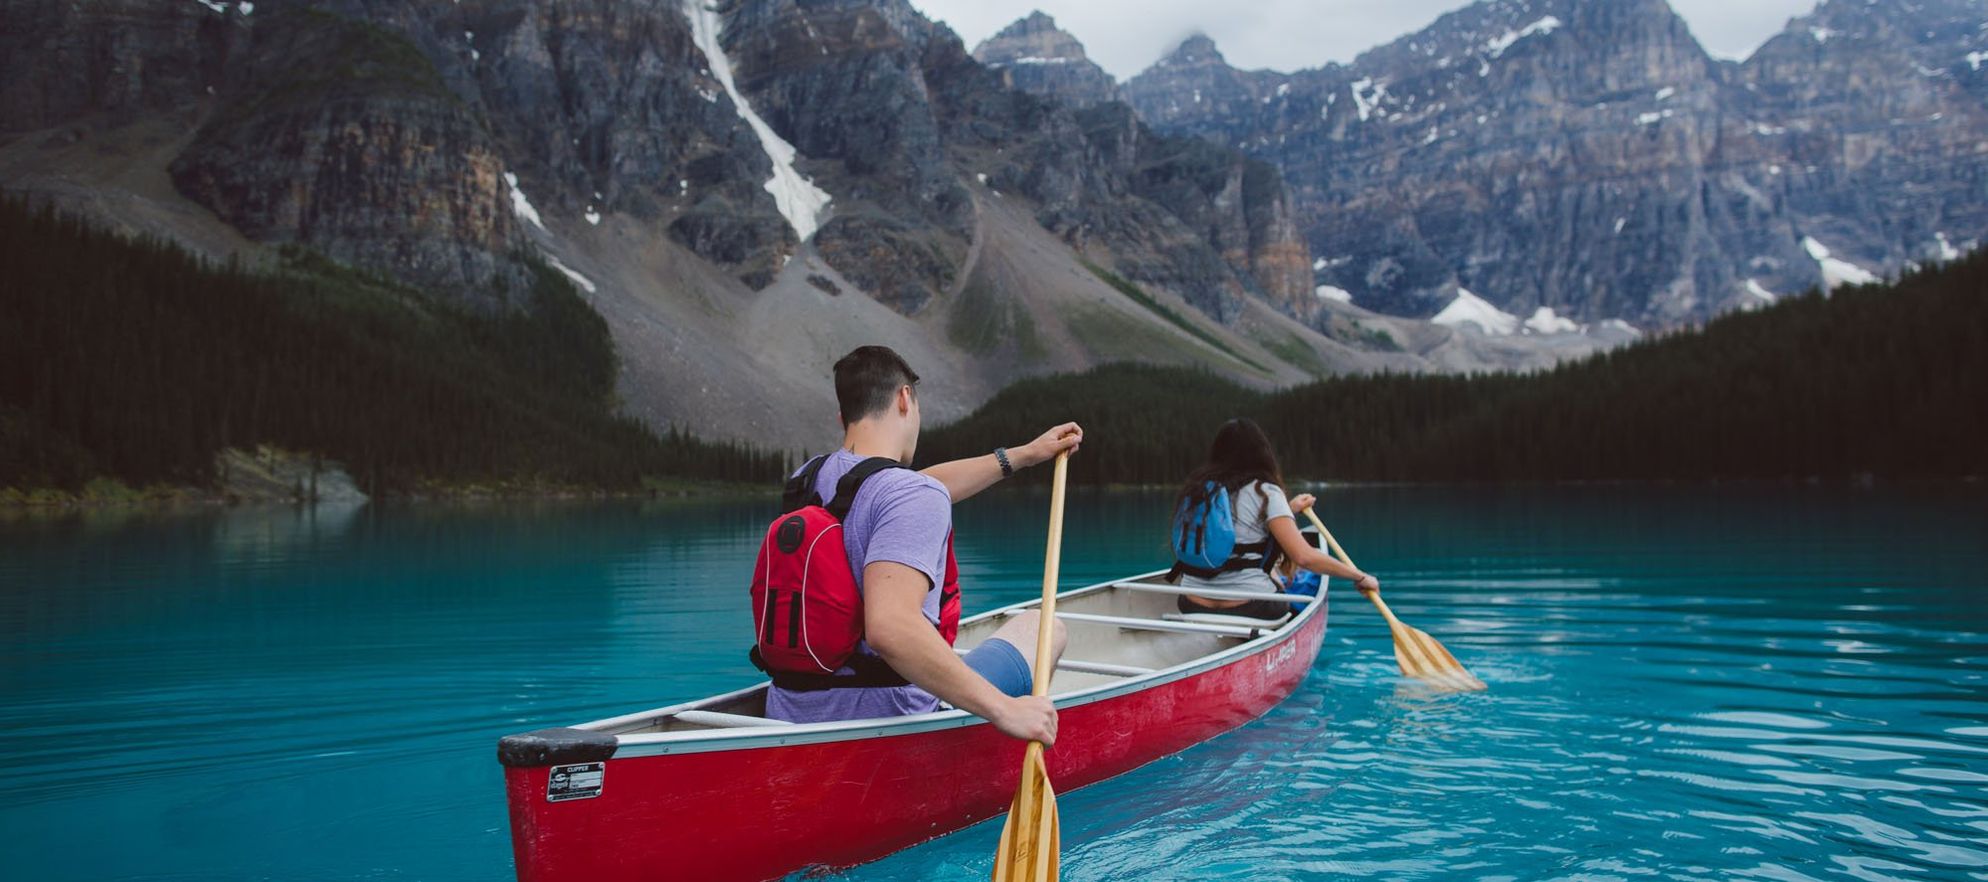 Canoeing Moraine Lake Banff National Park Jake Dyson